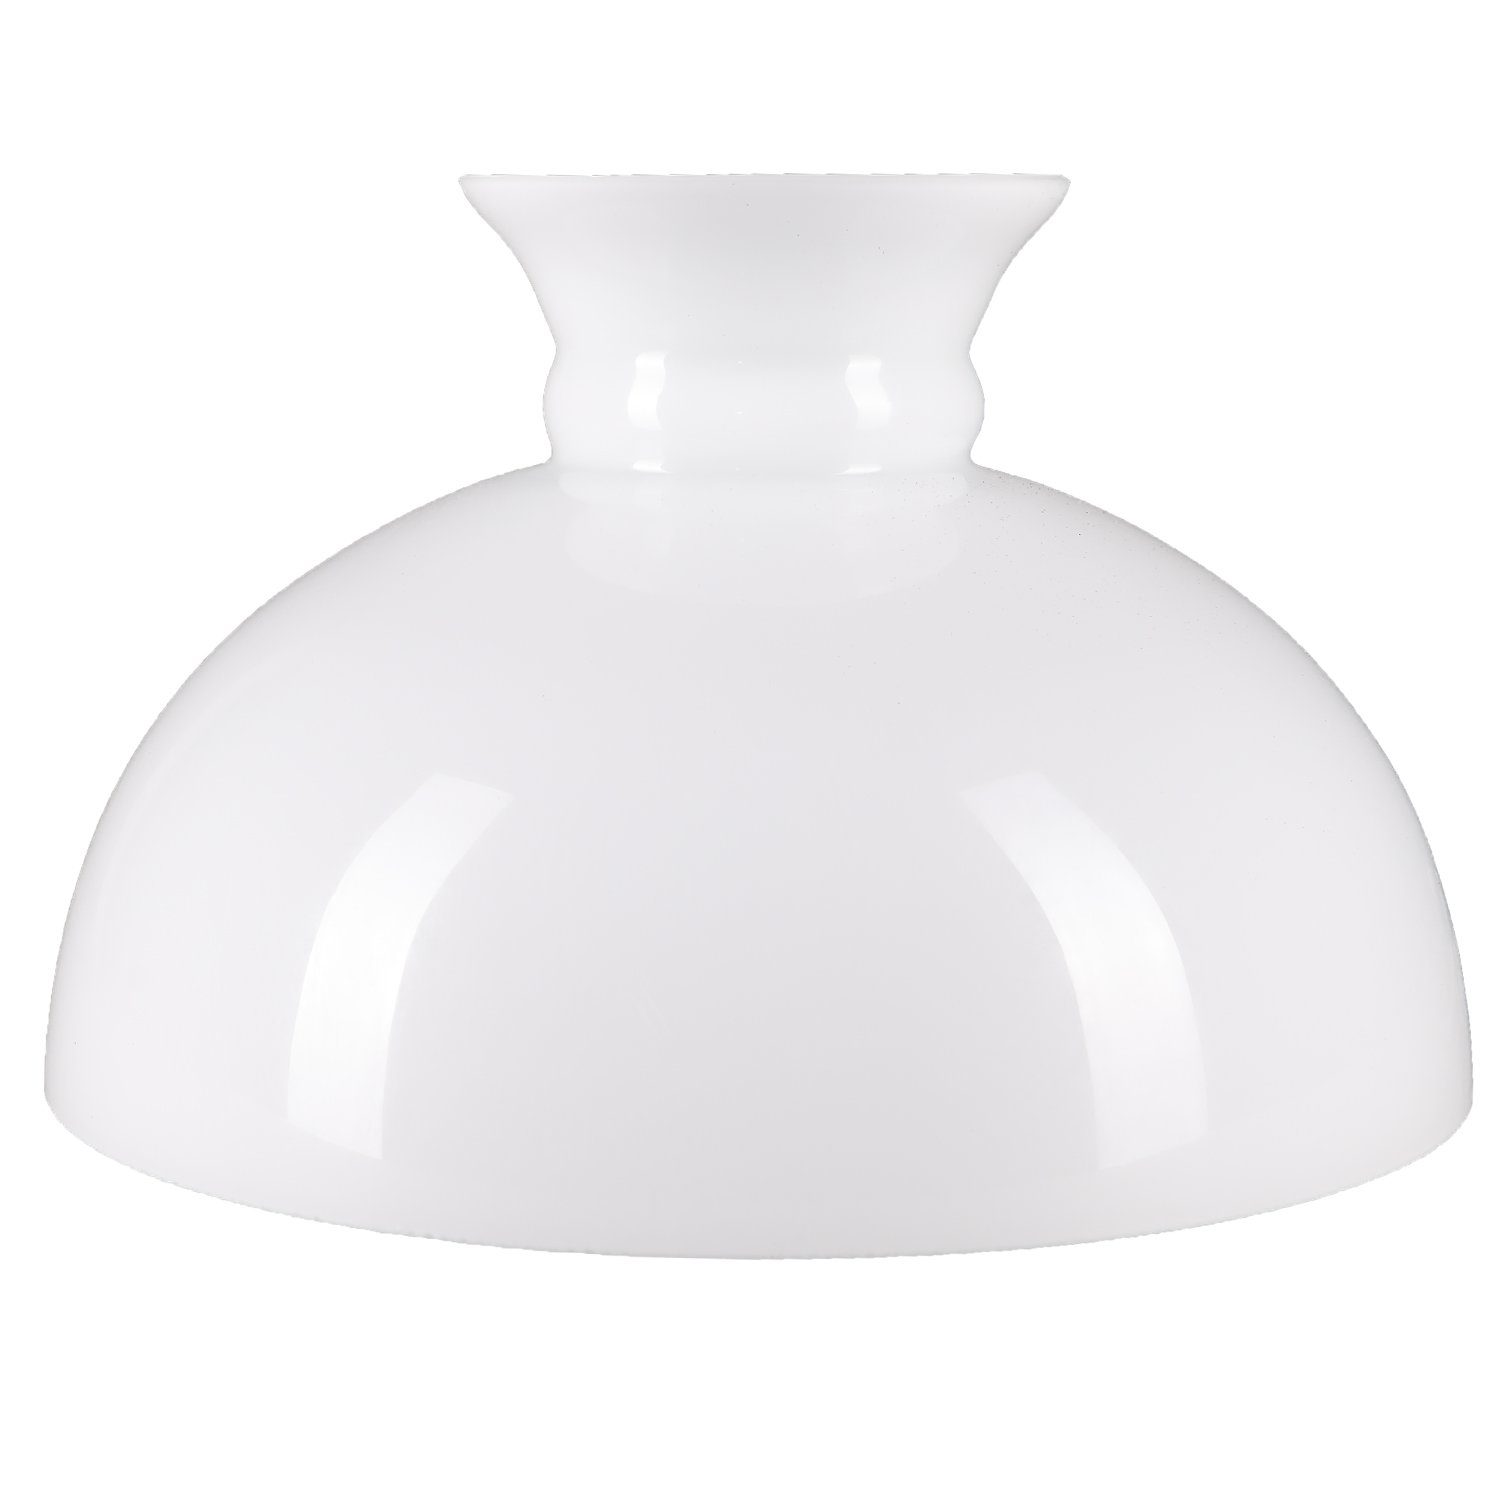 Home4Living Lampenschirm Petroleumglas Lampenglas Weiß Ersatzglas Glaschirm Ø300mm, Dekorativ